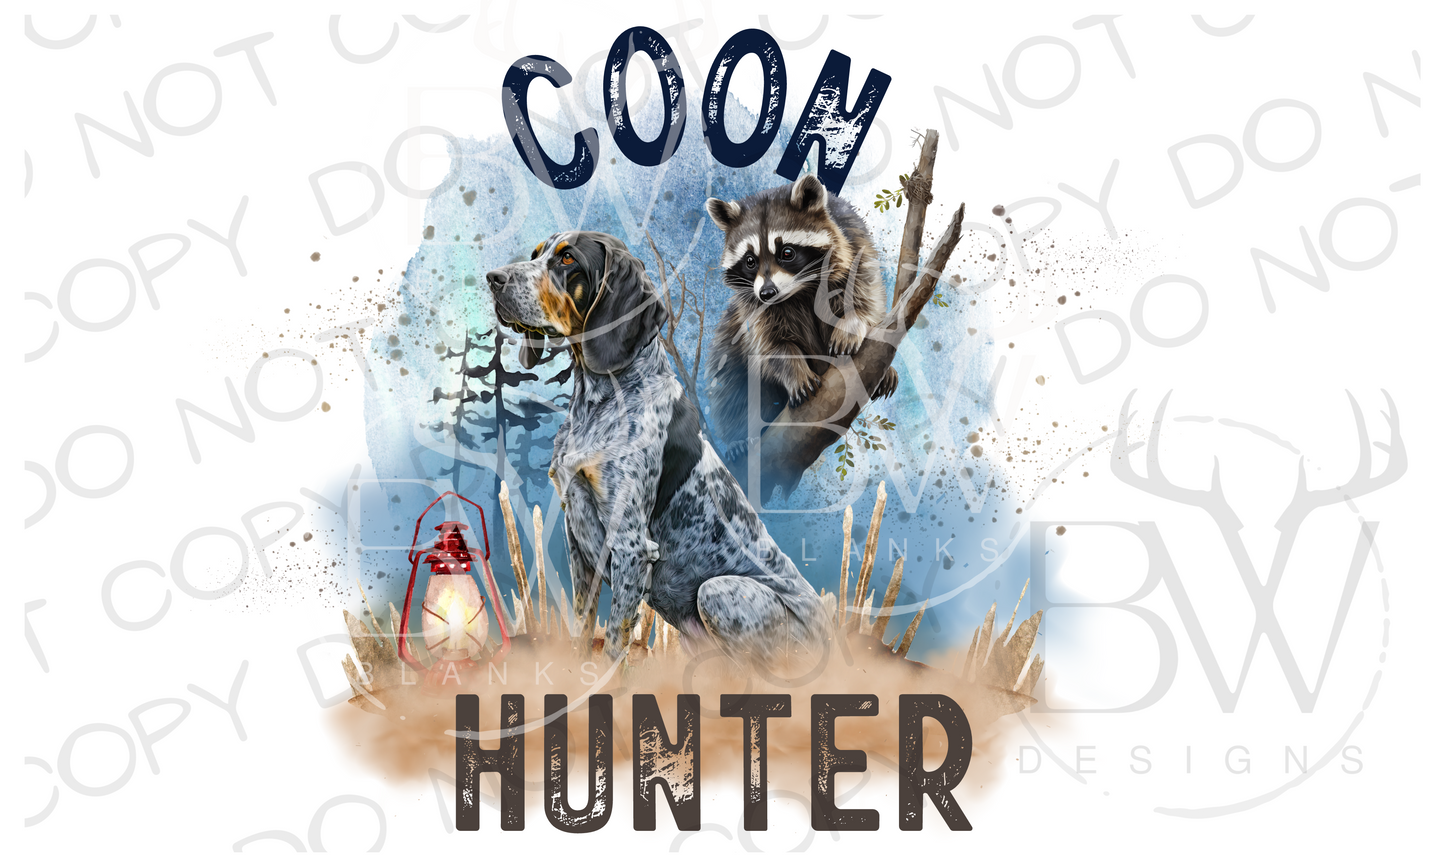 coon hunting shirts